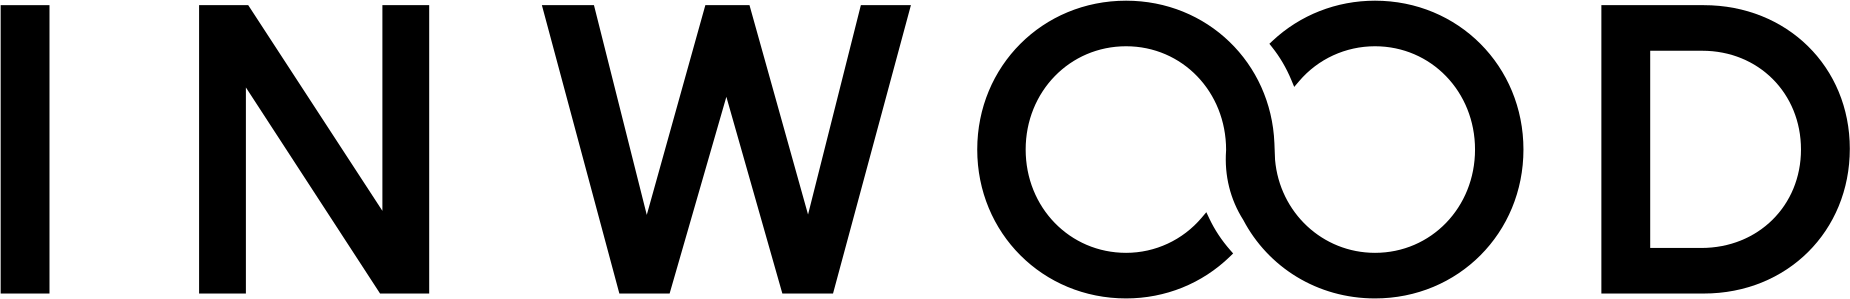 Inwood logo gray